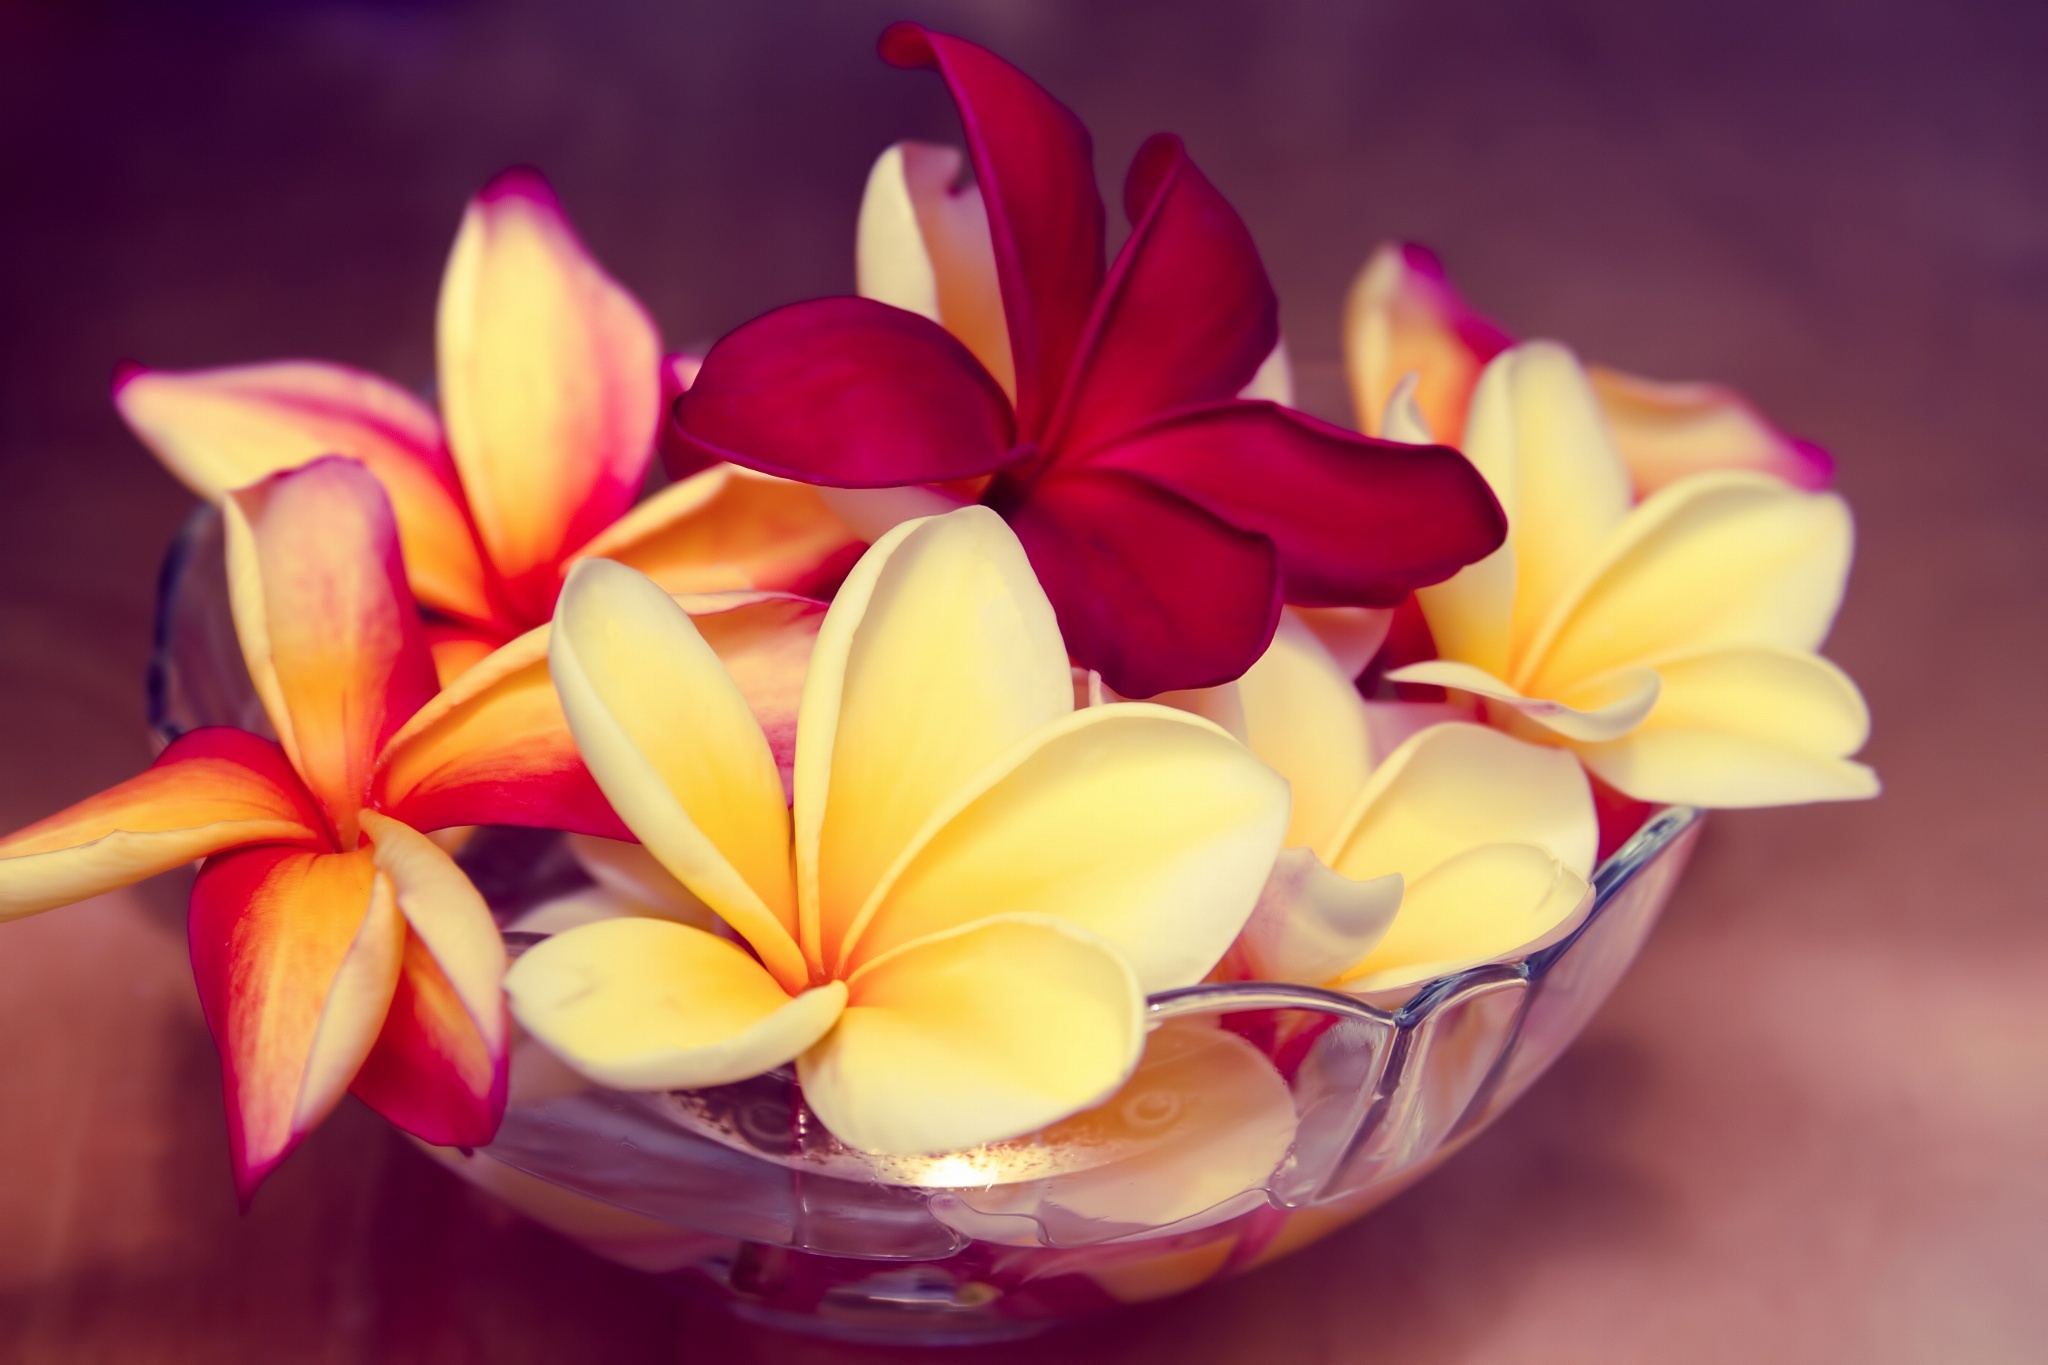 frangipani, plumeria, photography, still life, bowl, flower, red flower, yellow flower